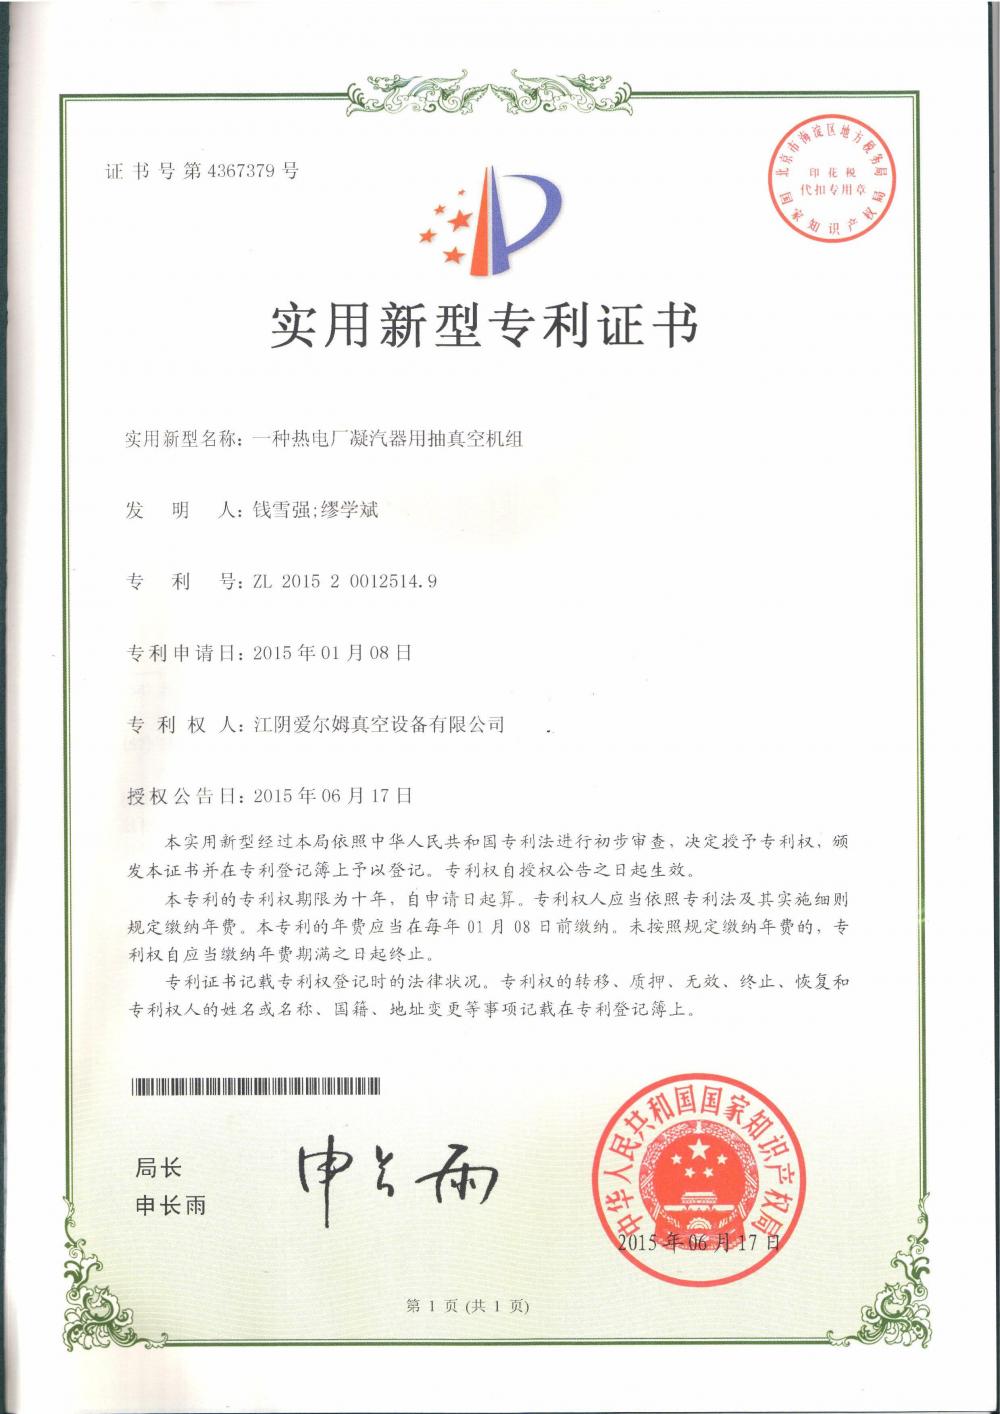 Power plant condenser patent certificate